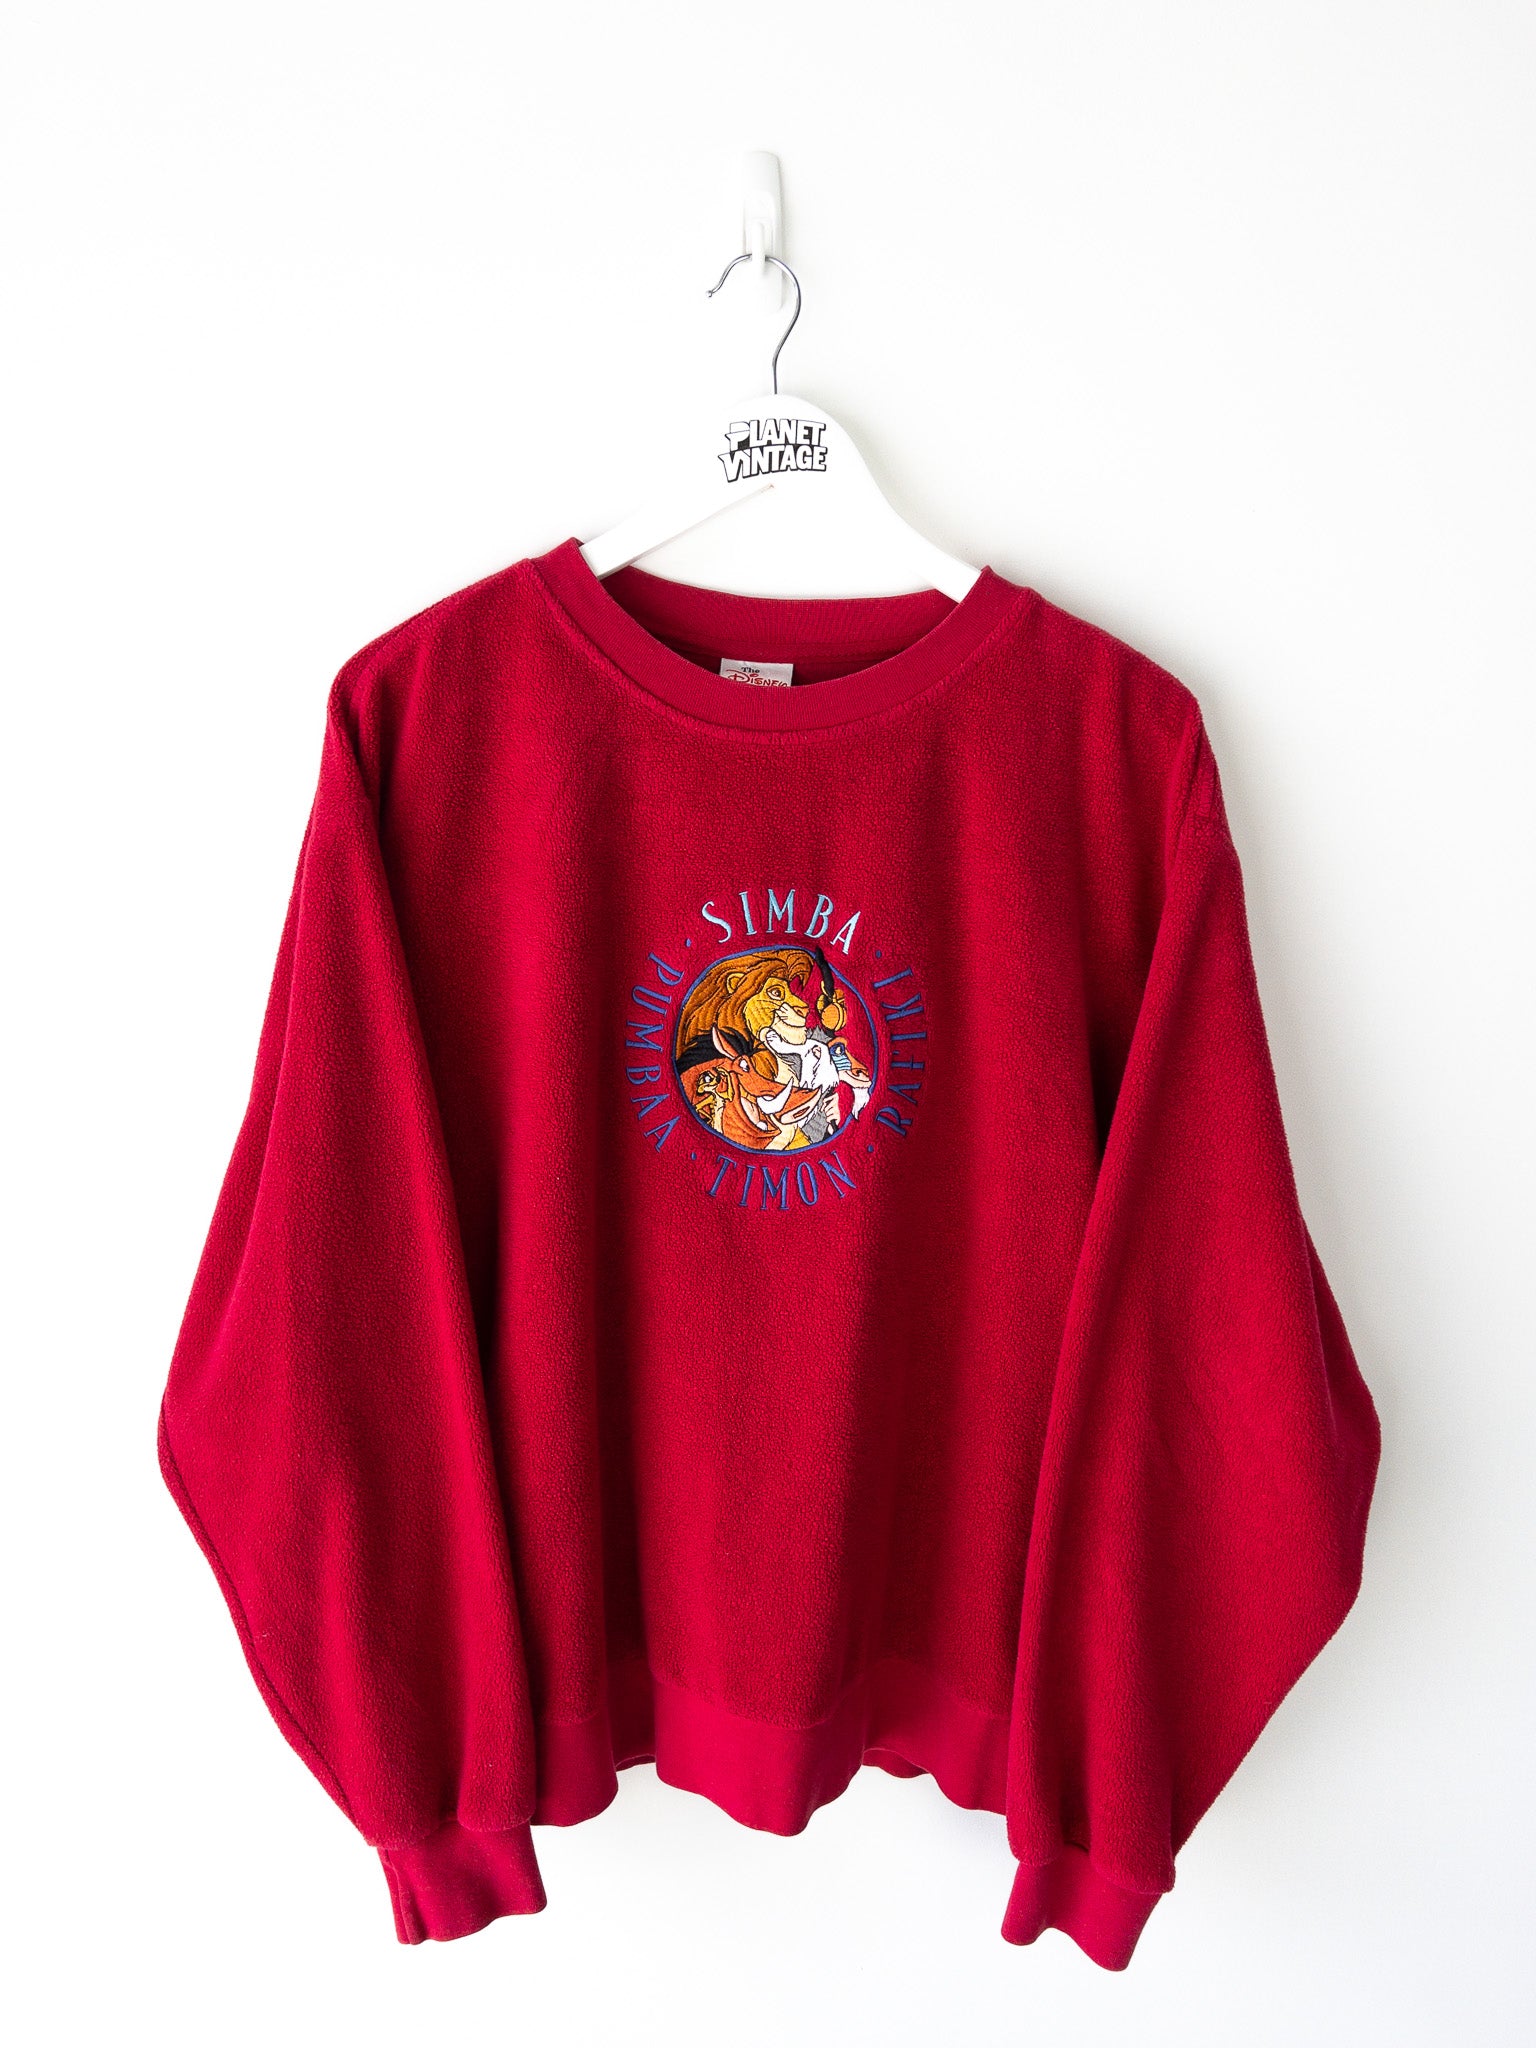 Vintage Lion King Sweatshirt (L)